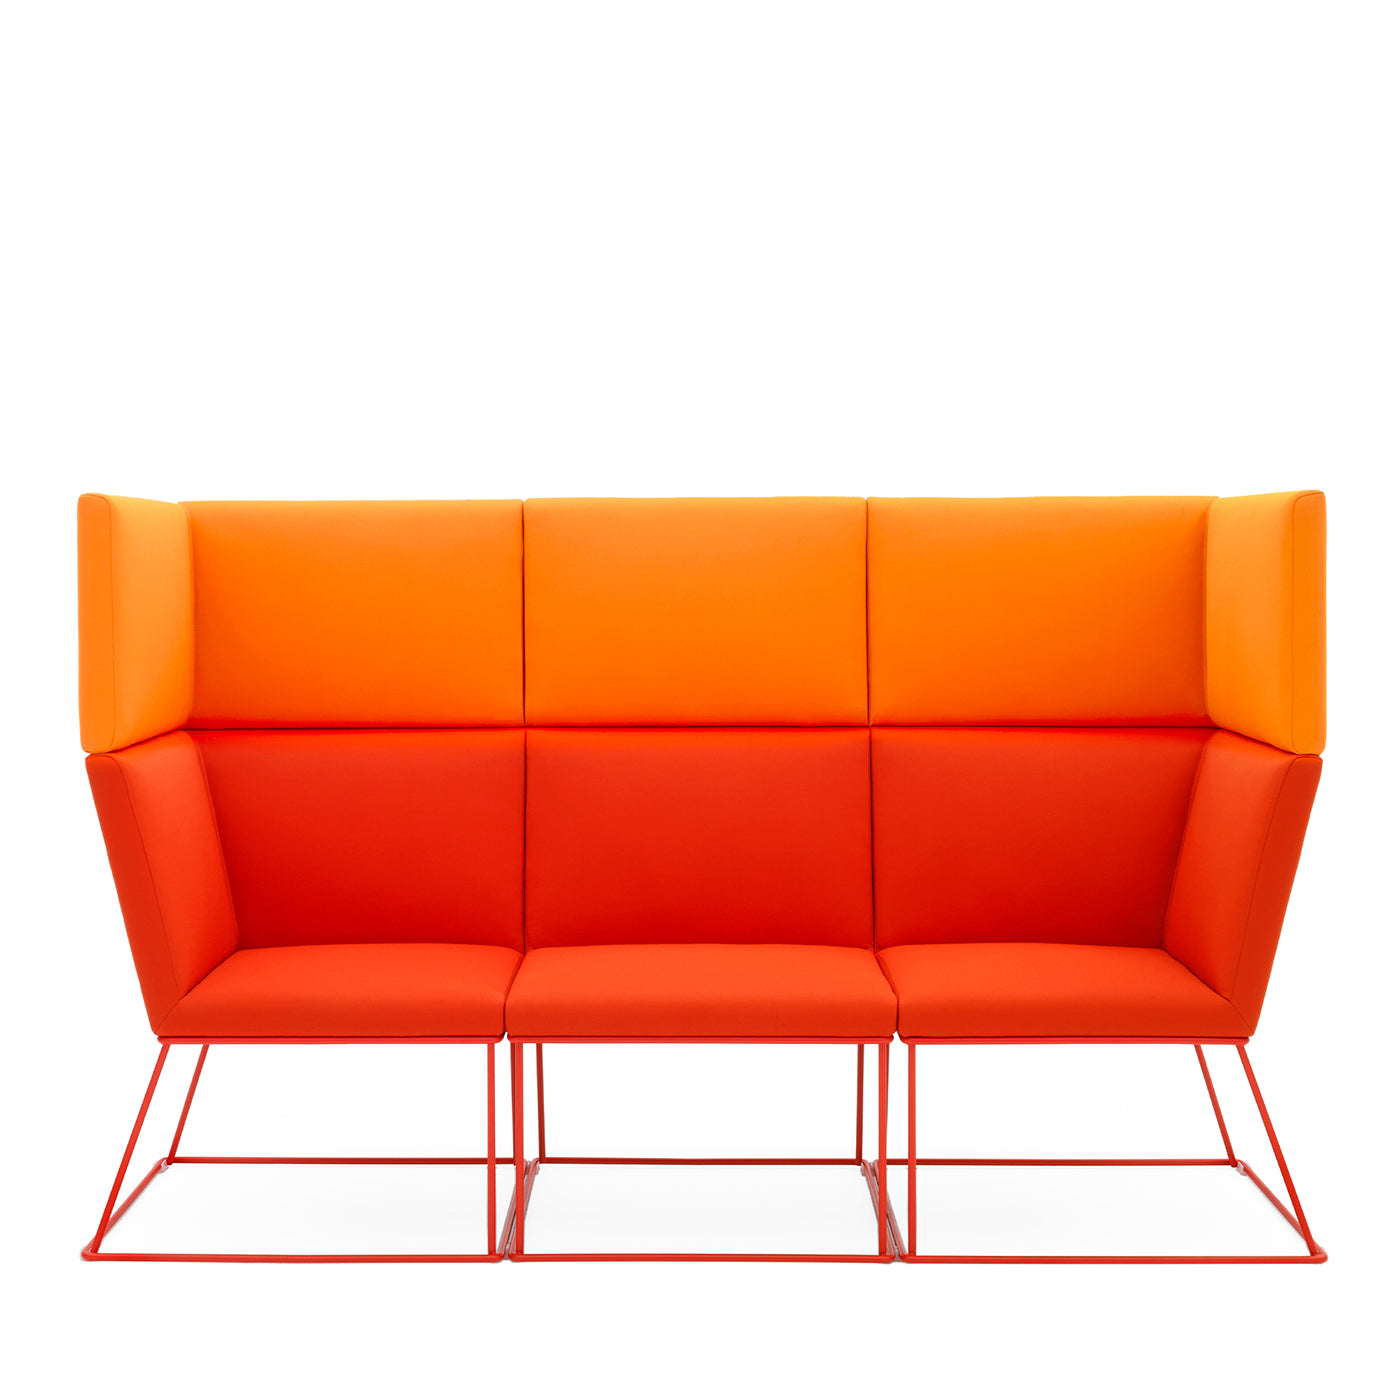 GEORGE modular sofa #2 by Basaglia + Rota Nodari - Main view